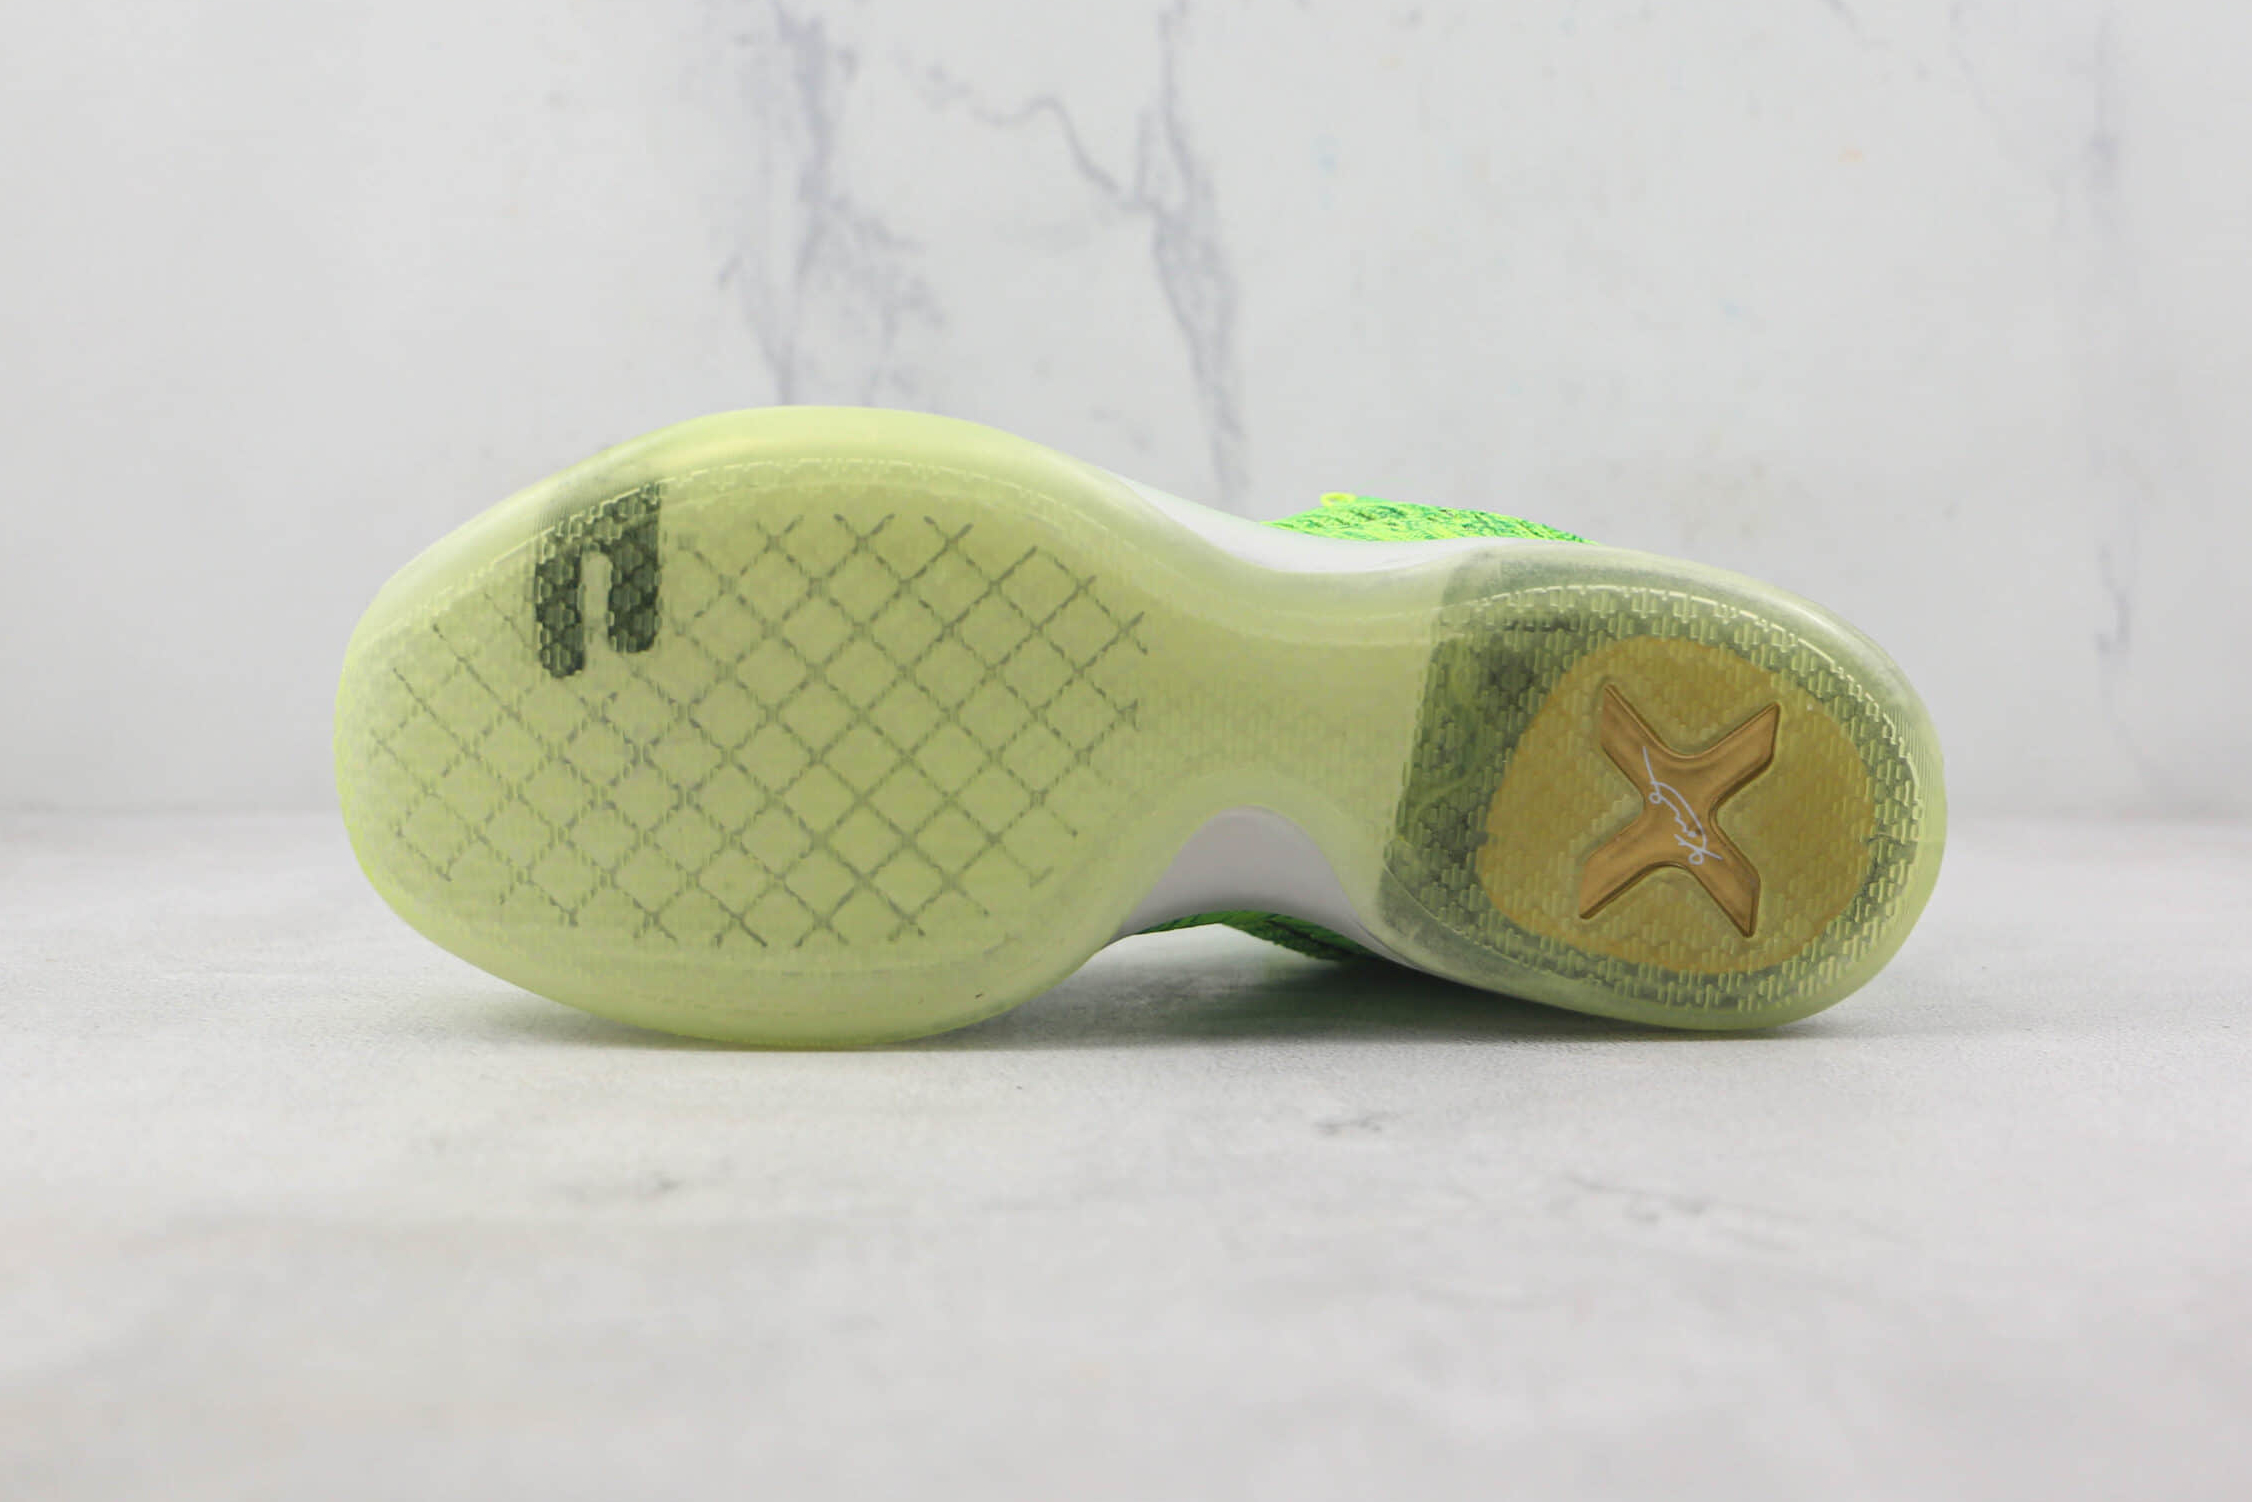 Nike Kobe 10 Elite 'Grinch' iD 802817-901 - Superior Performance with Iconic Design